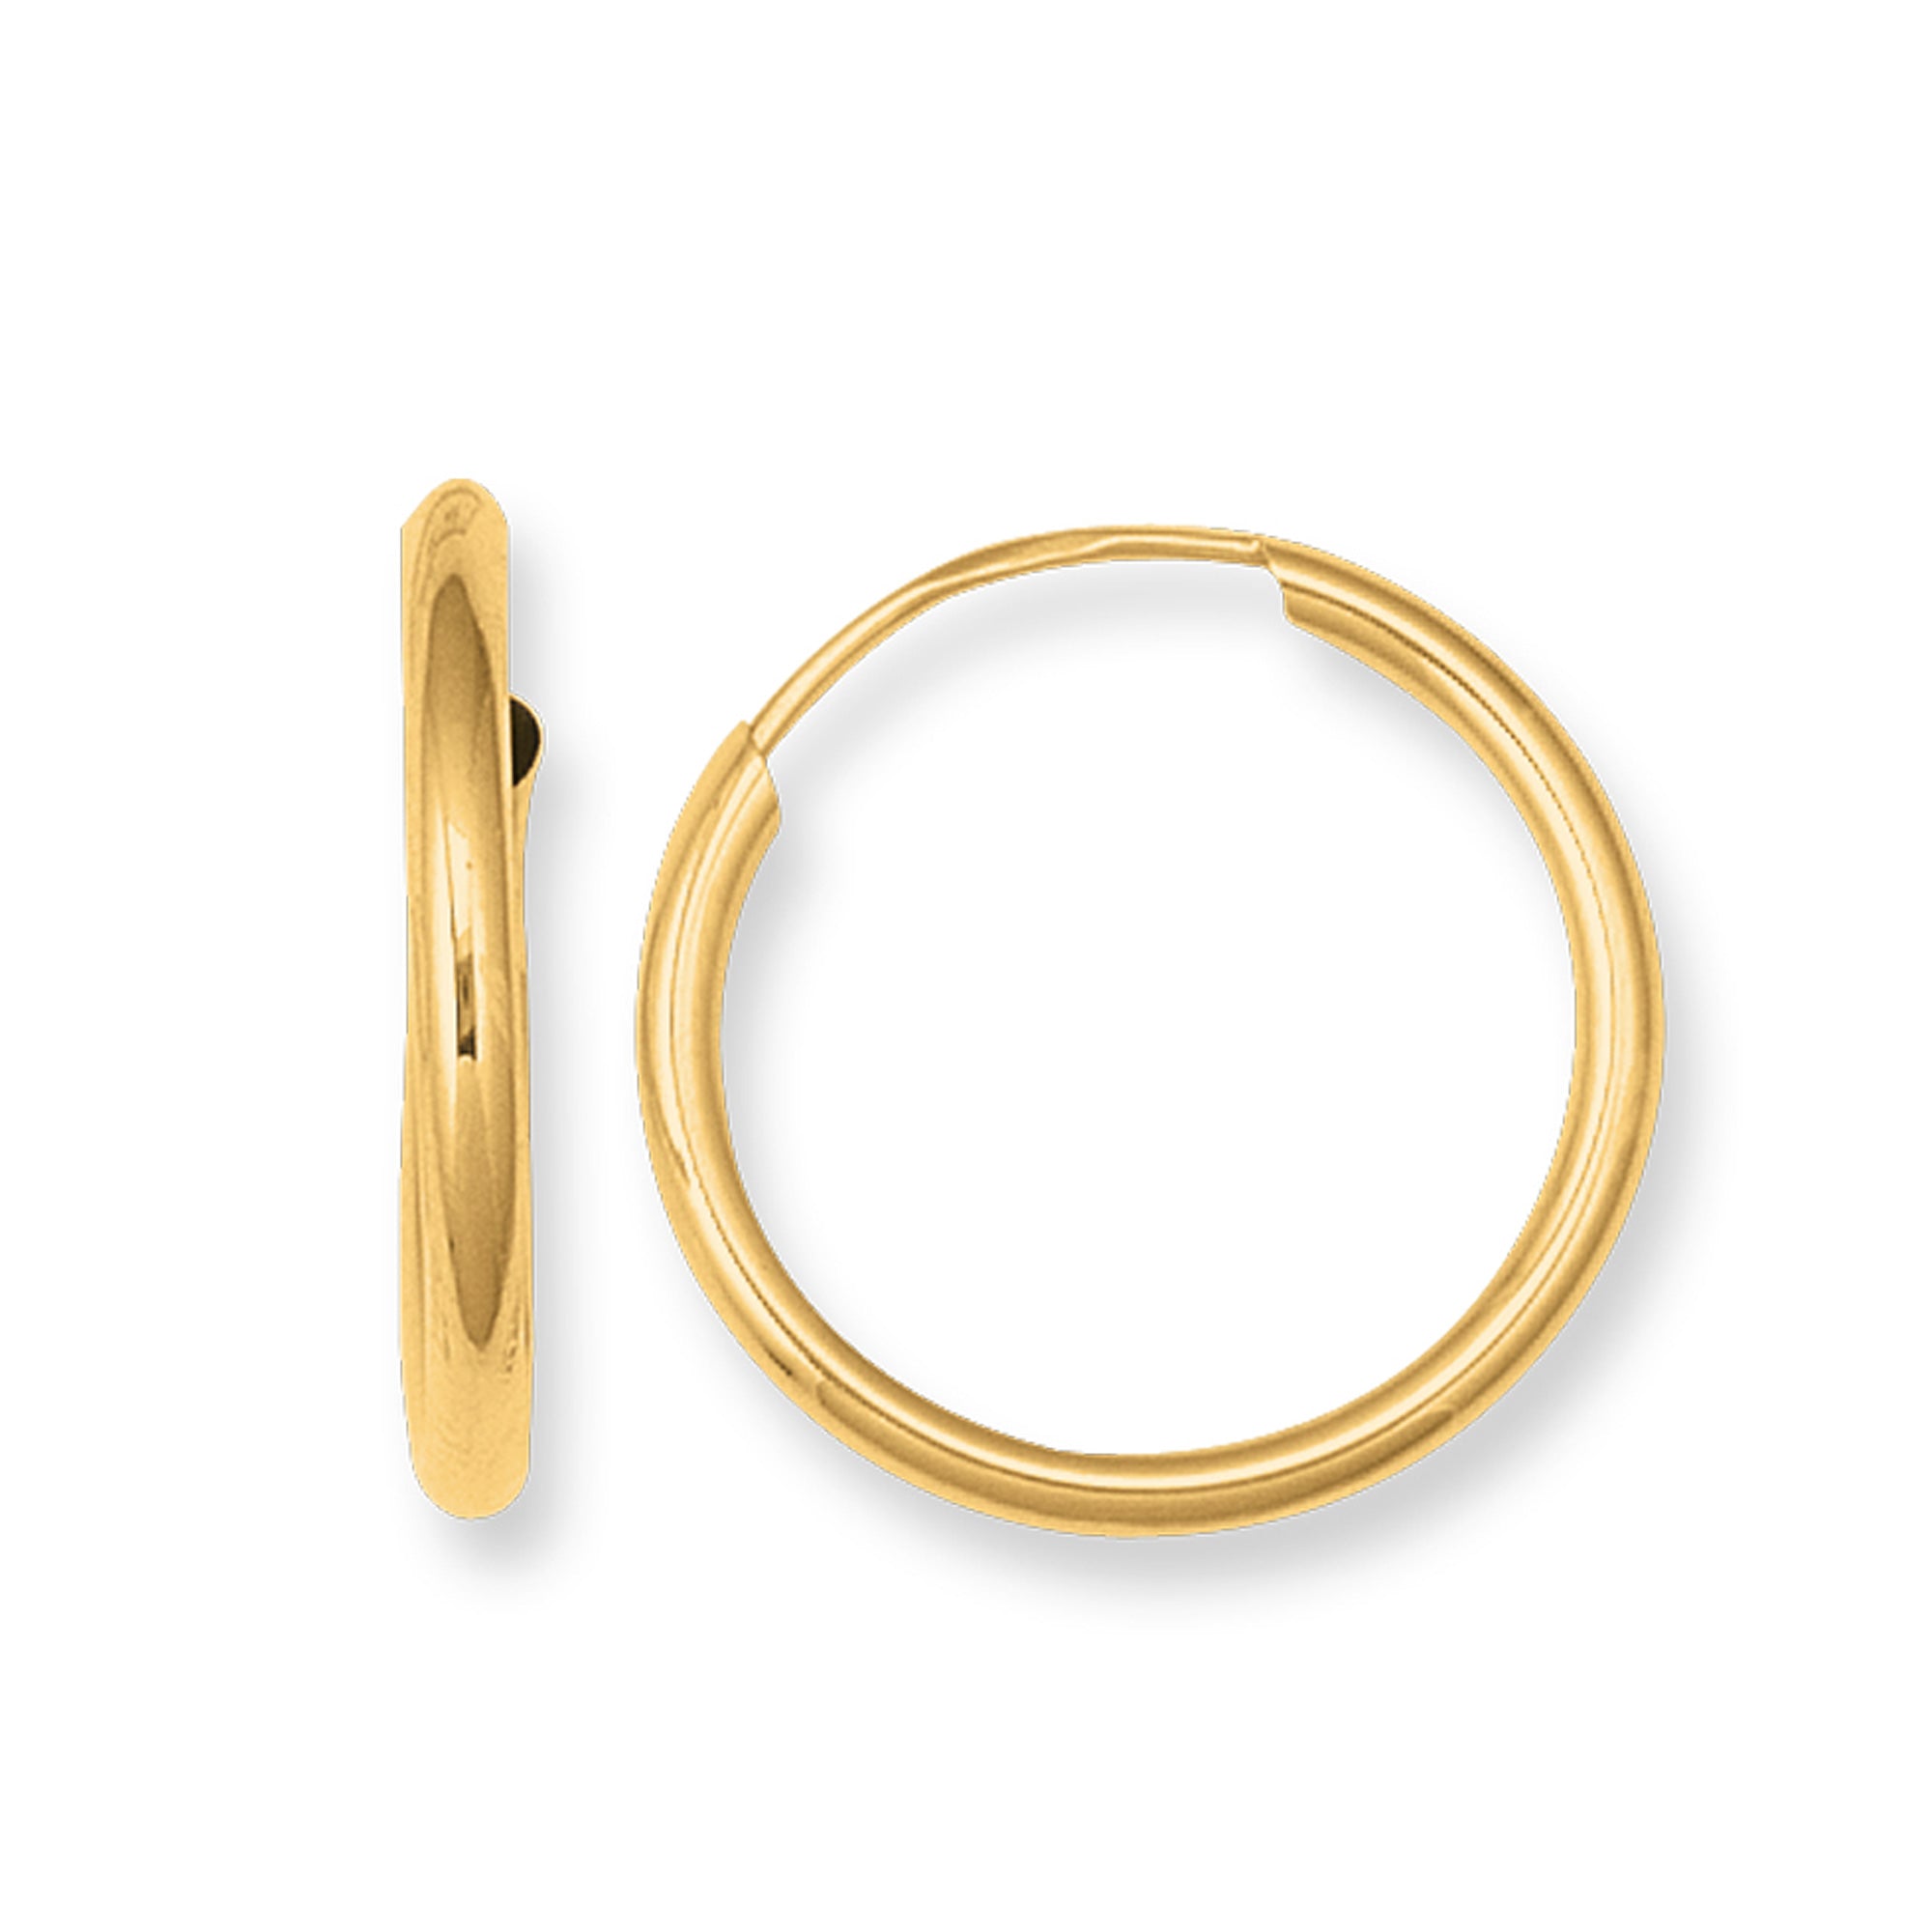 14K Gold Round Endless Hoop Earrings, 10mm fine designer jewelry for men and women